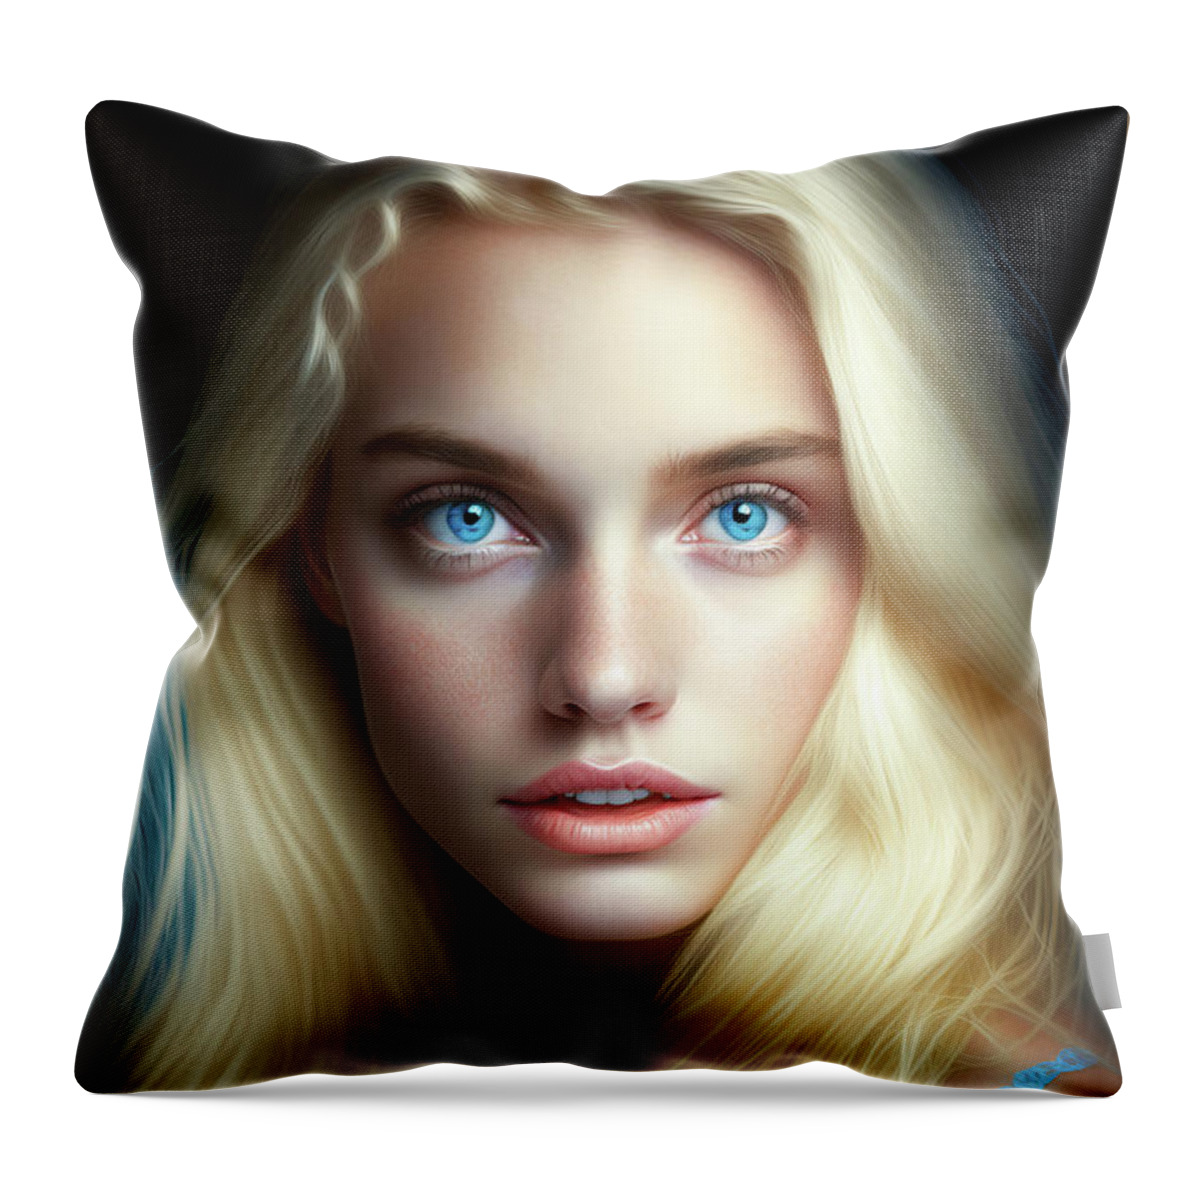 Woman Throw Pillow featuring the digital art Woman Portrait 25 Blonde Hair Blue Eyes by Matthias Hauser